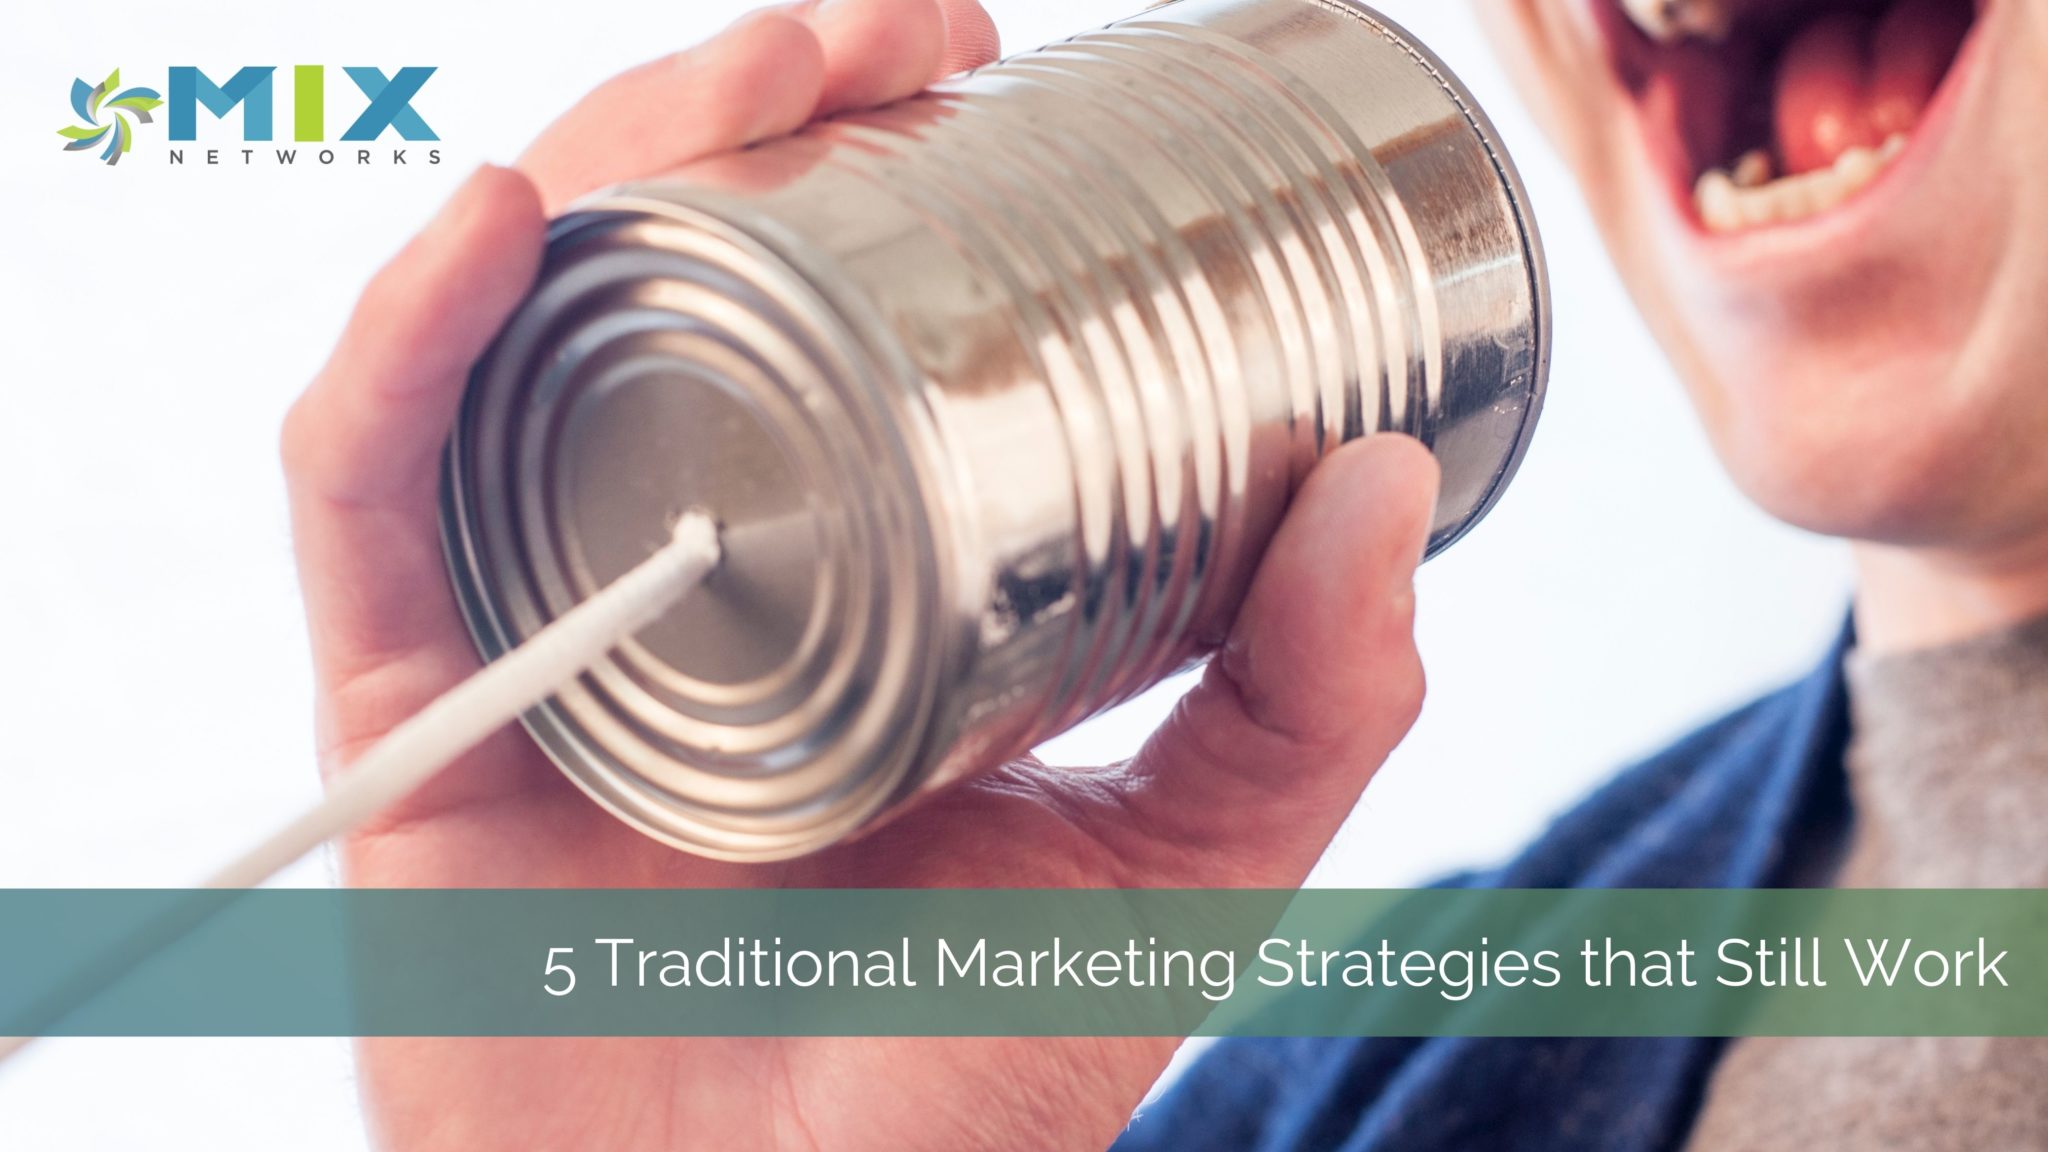 Traditional Marketing Strategies